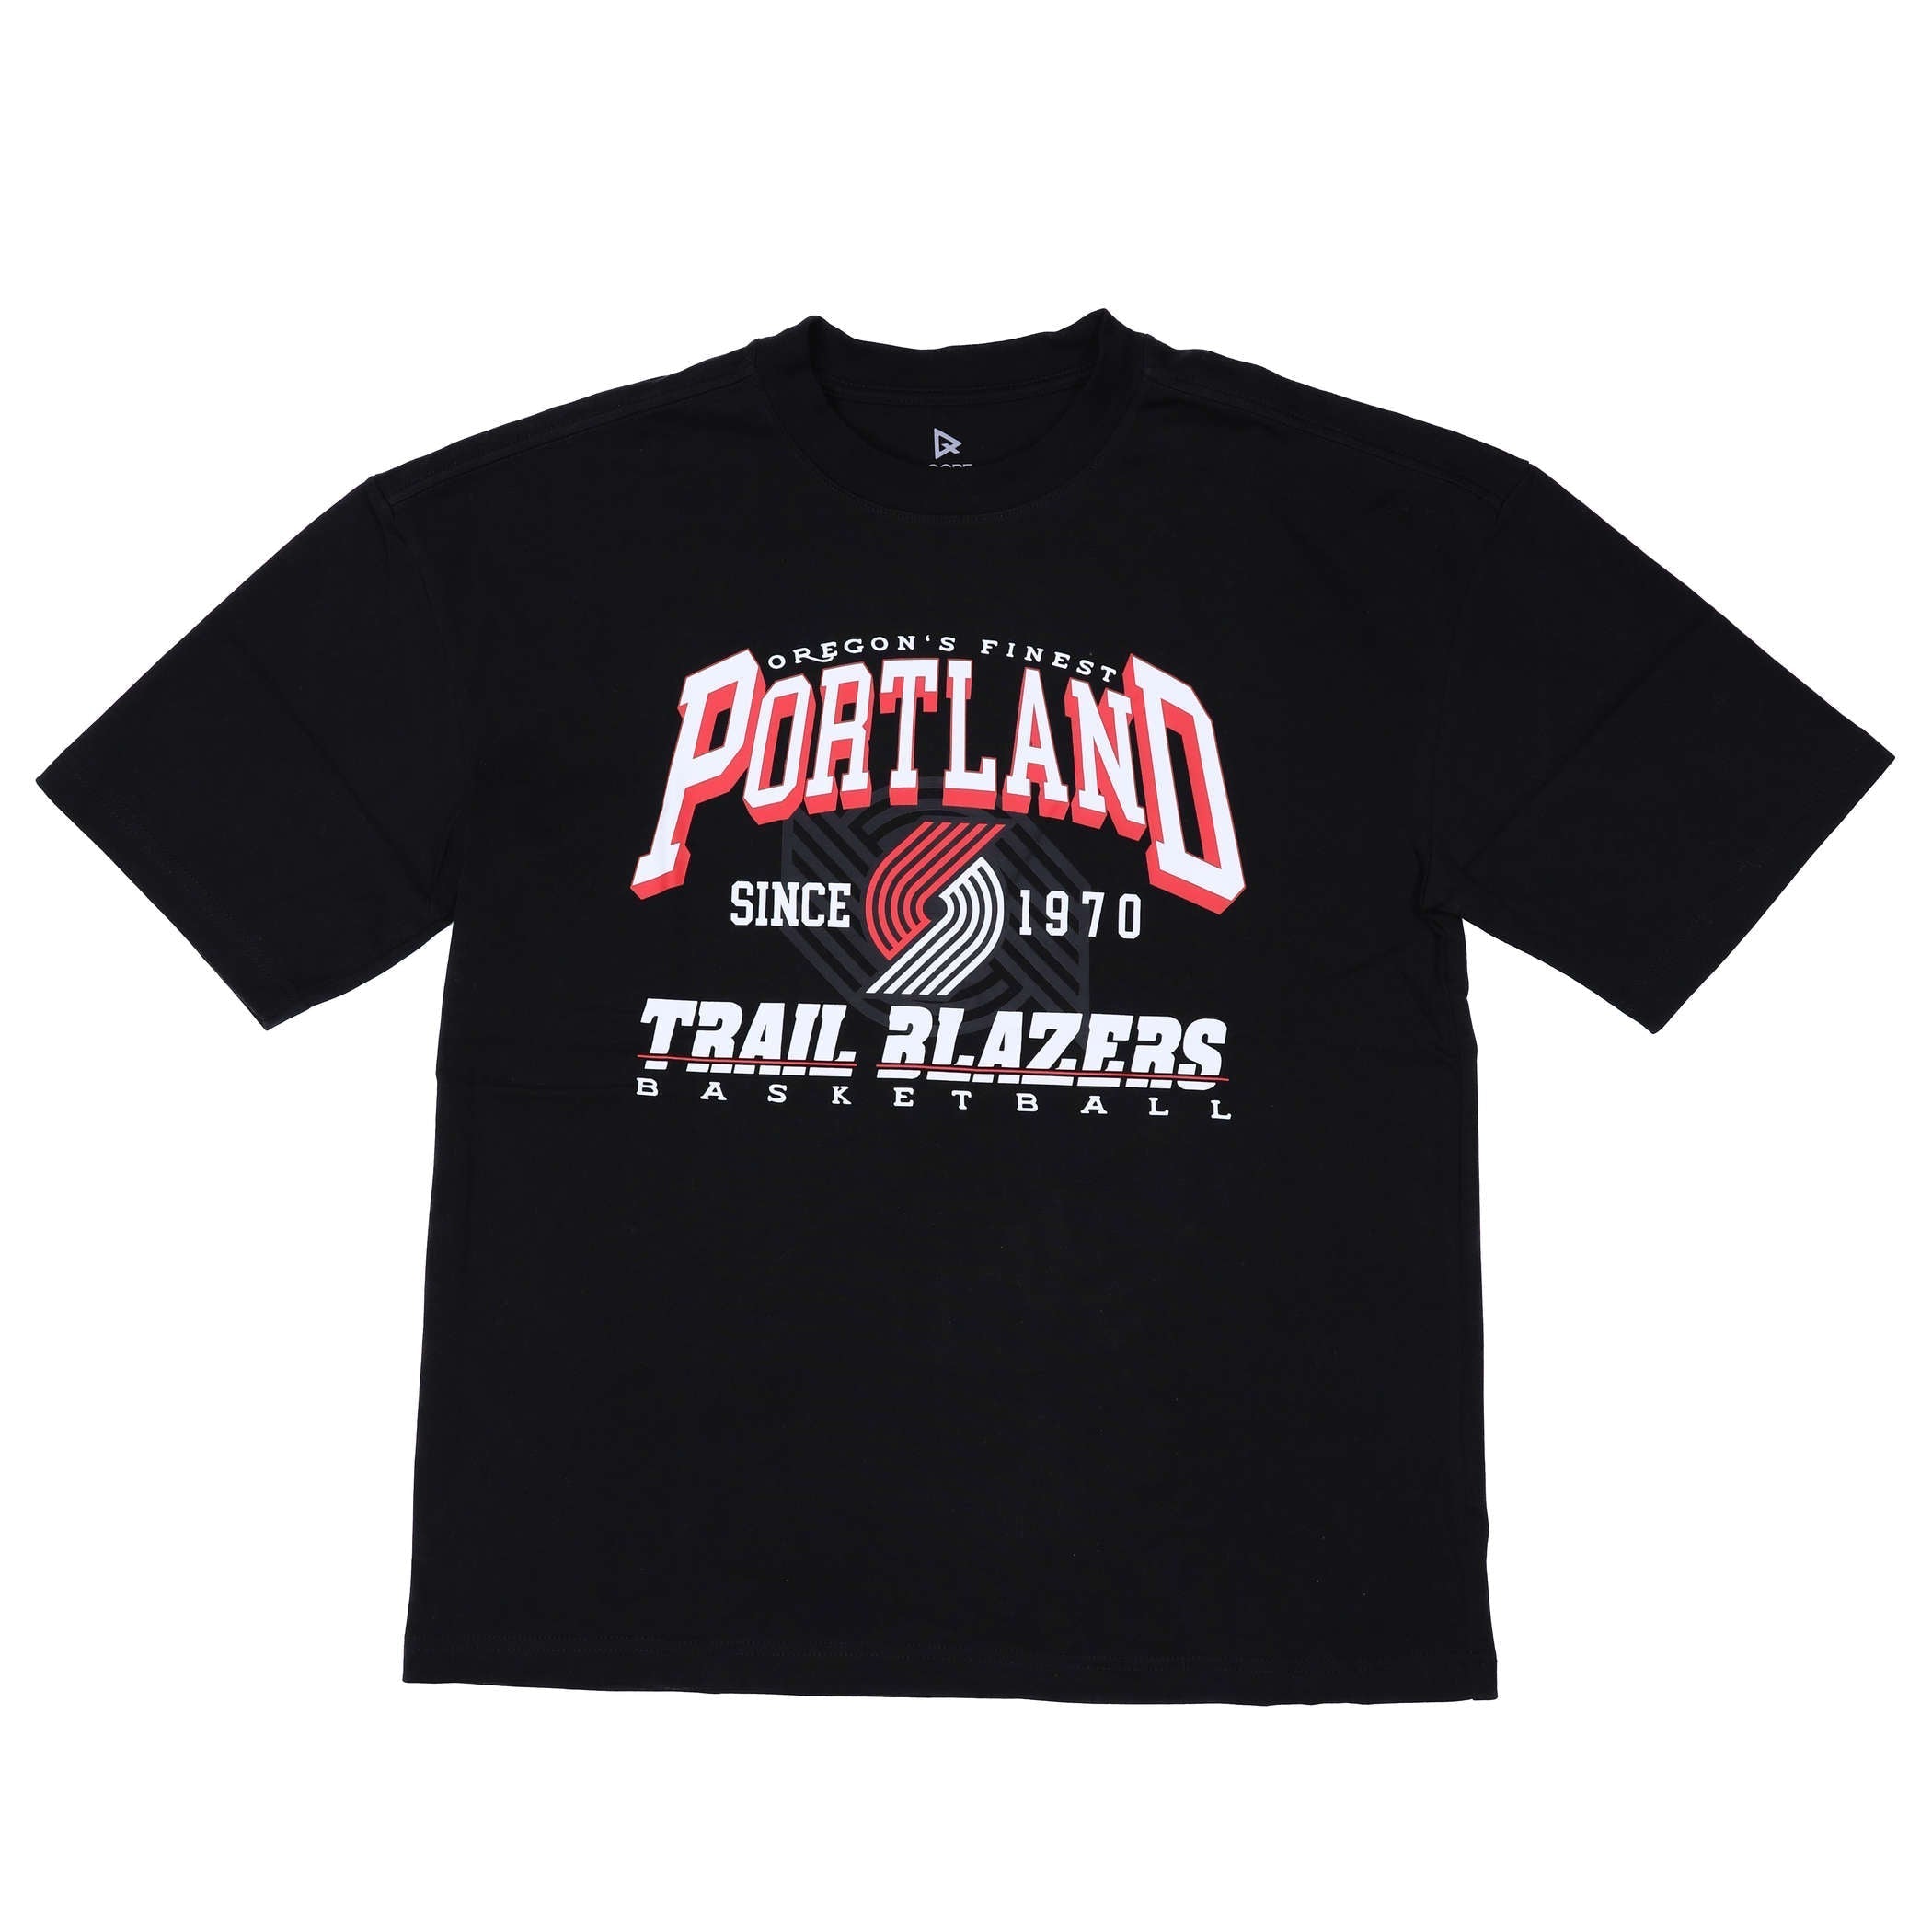 Portland Trail Blazers Qore Women's Oversized Black T - Shirt - S/M - 